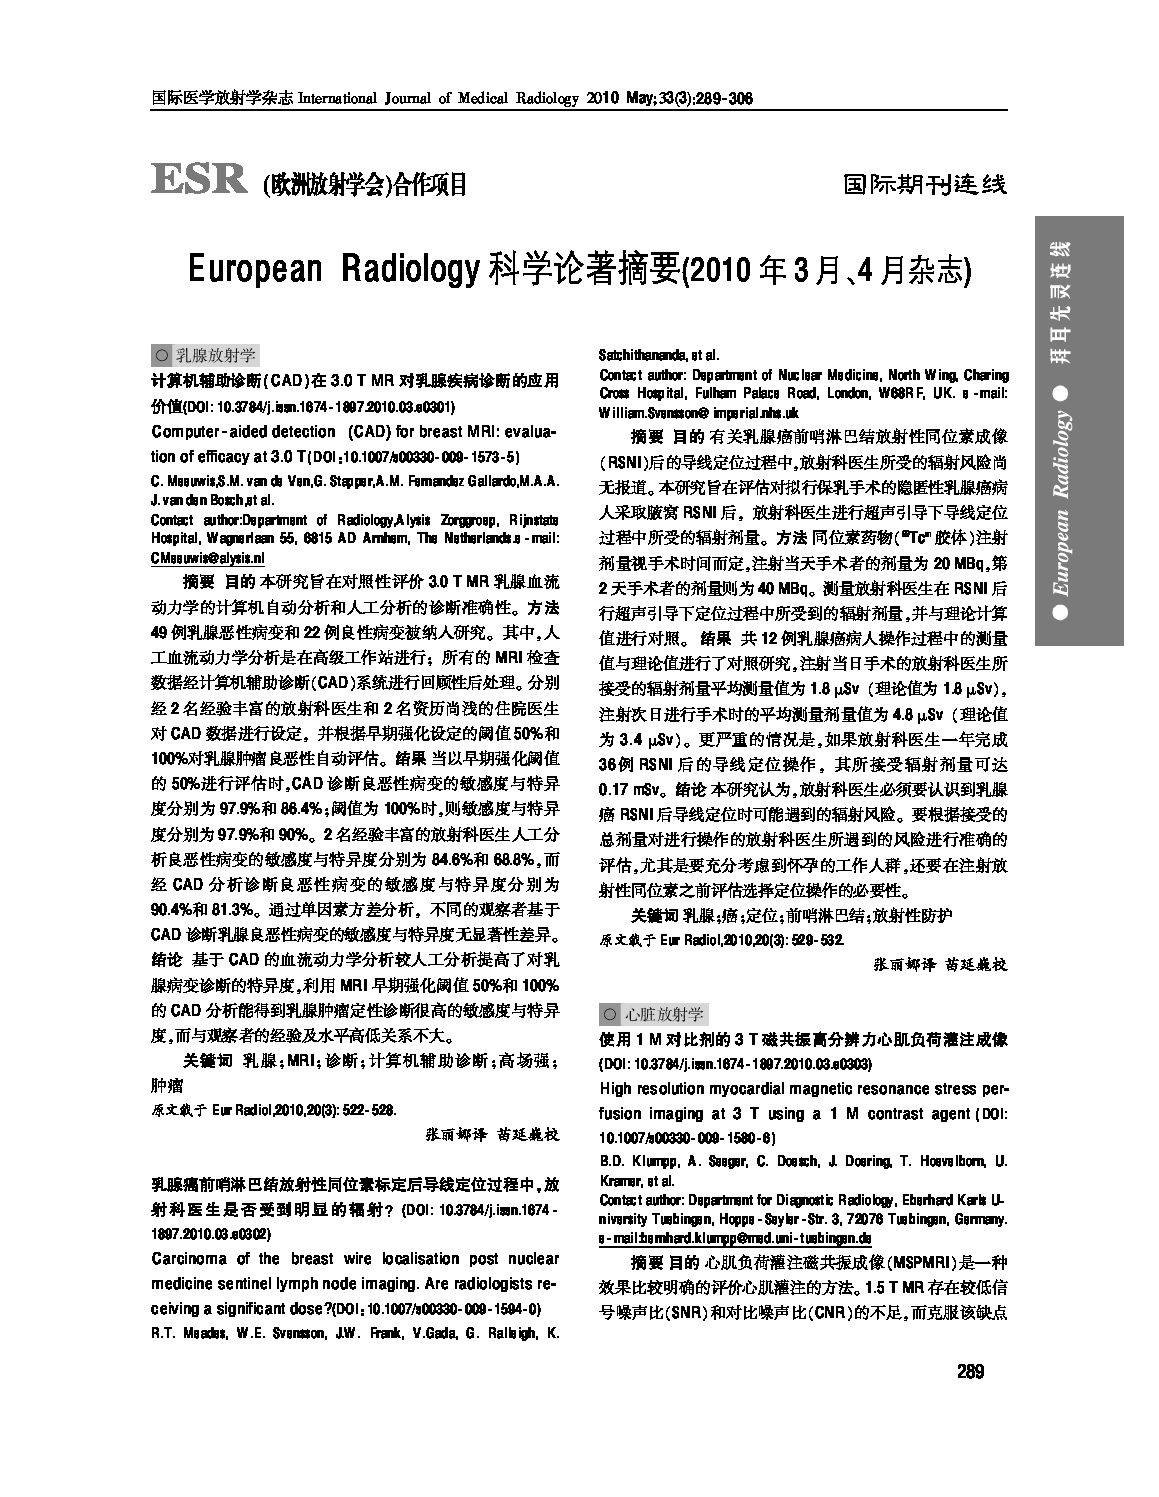 European Radiology Vol. 2010, March-April (1.4MB)